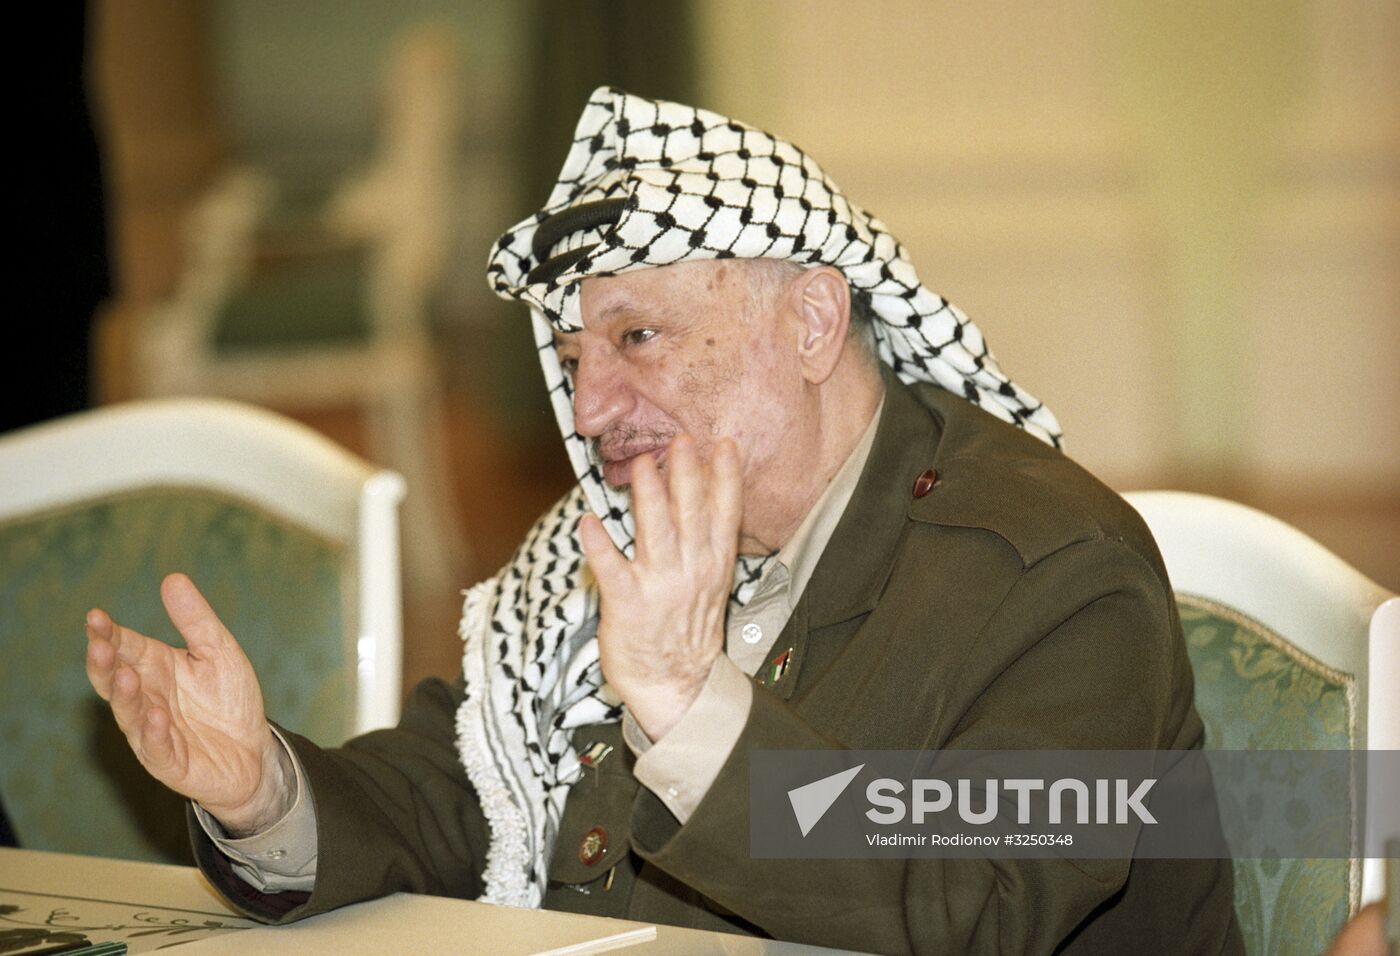 Palestine National Authority leader Yasser Arafat